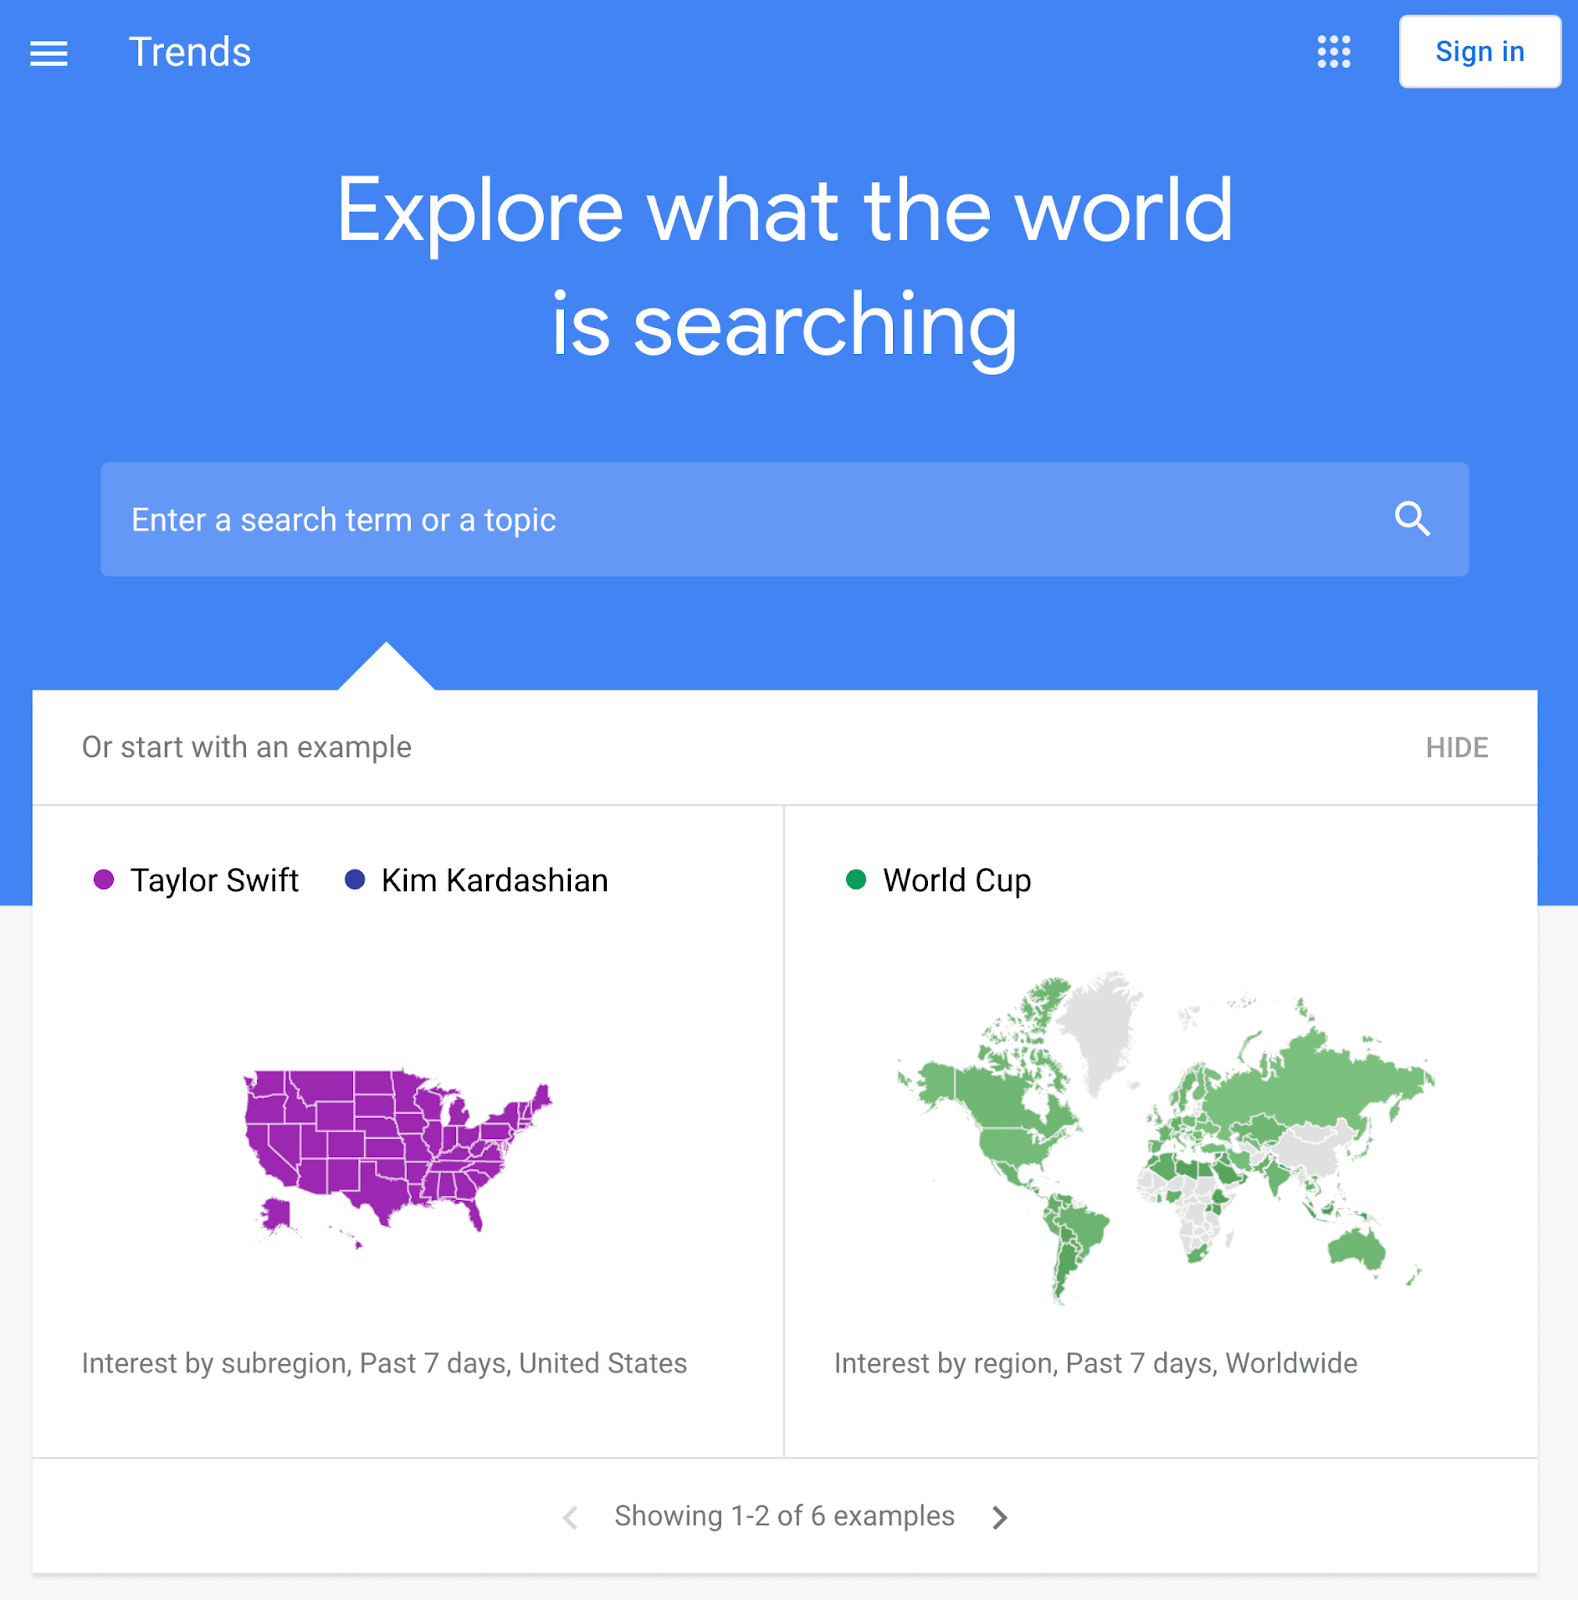 google trends homepage